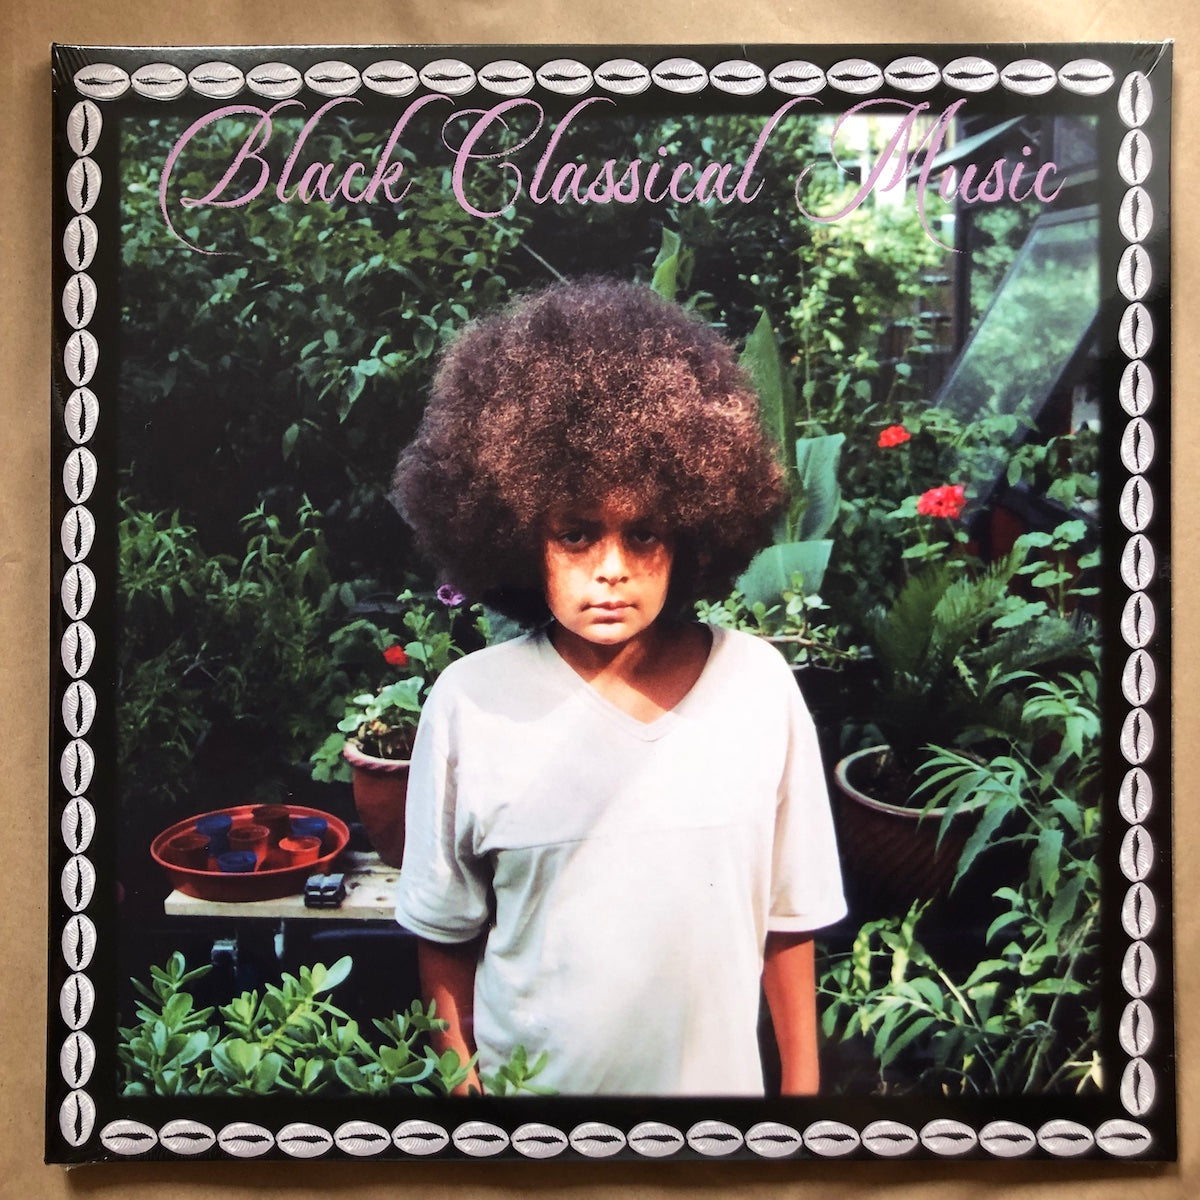 Black Classical Music: White Double Vinyl LP